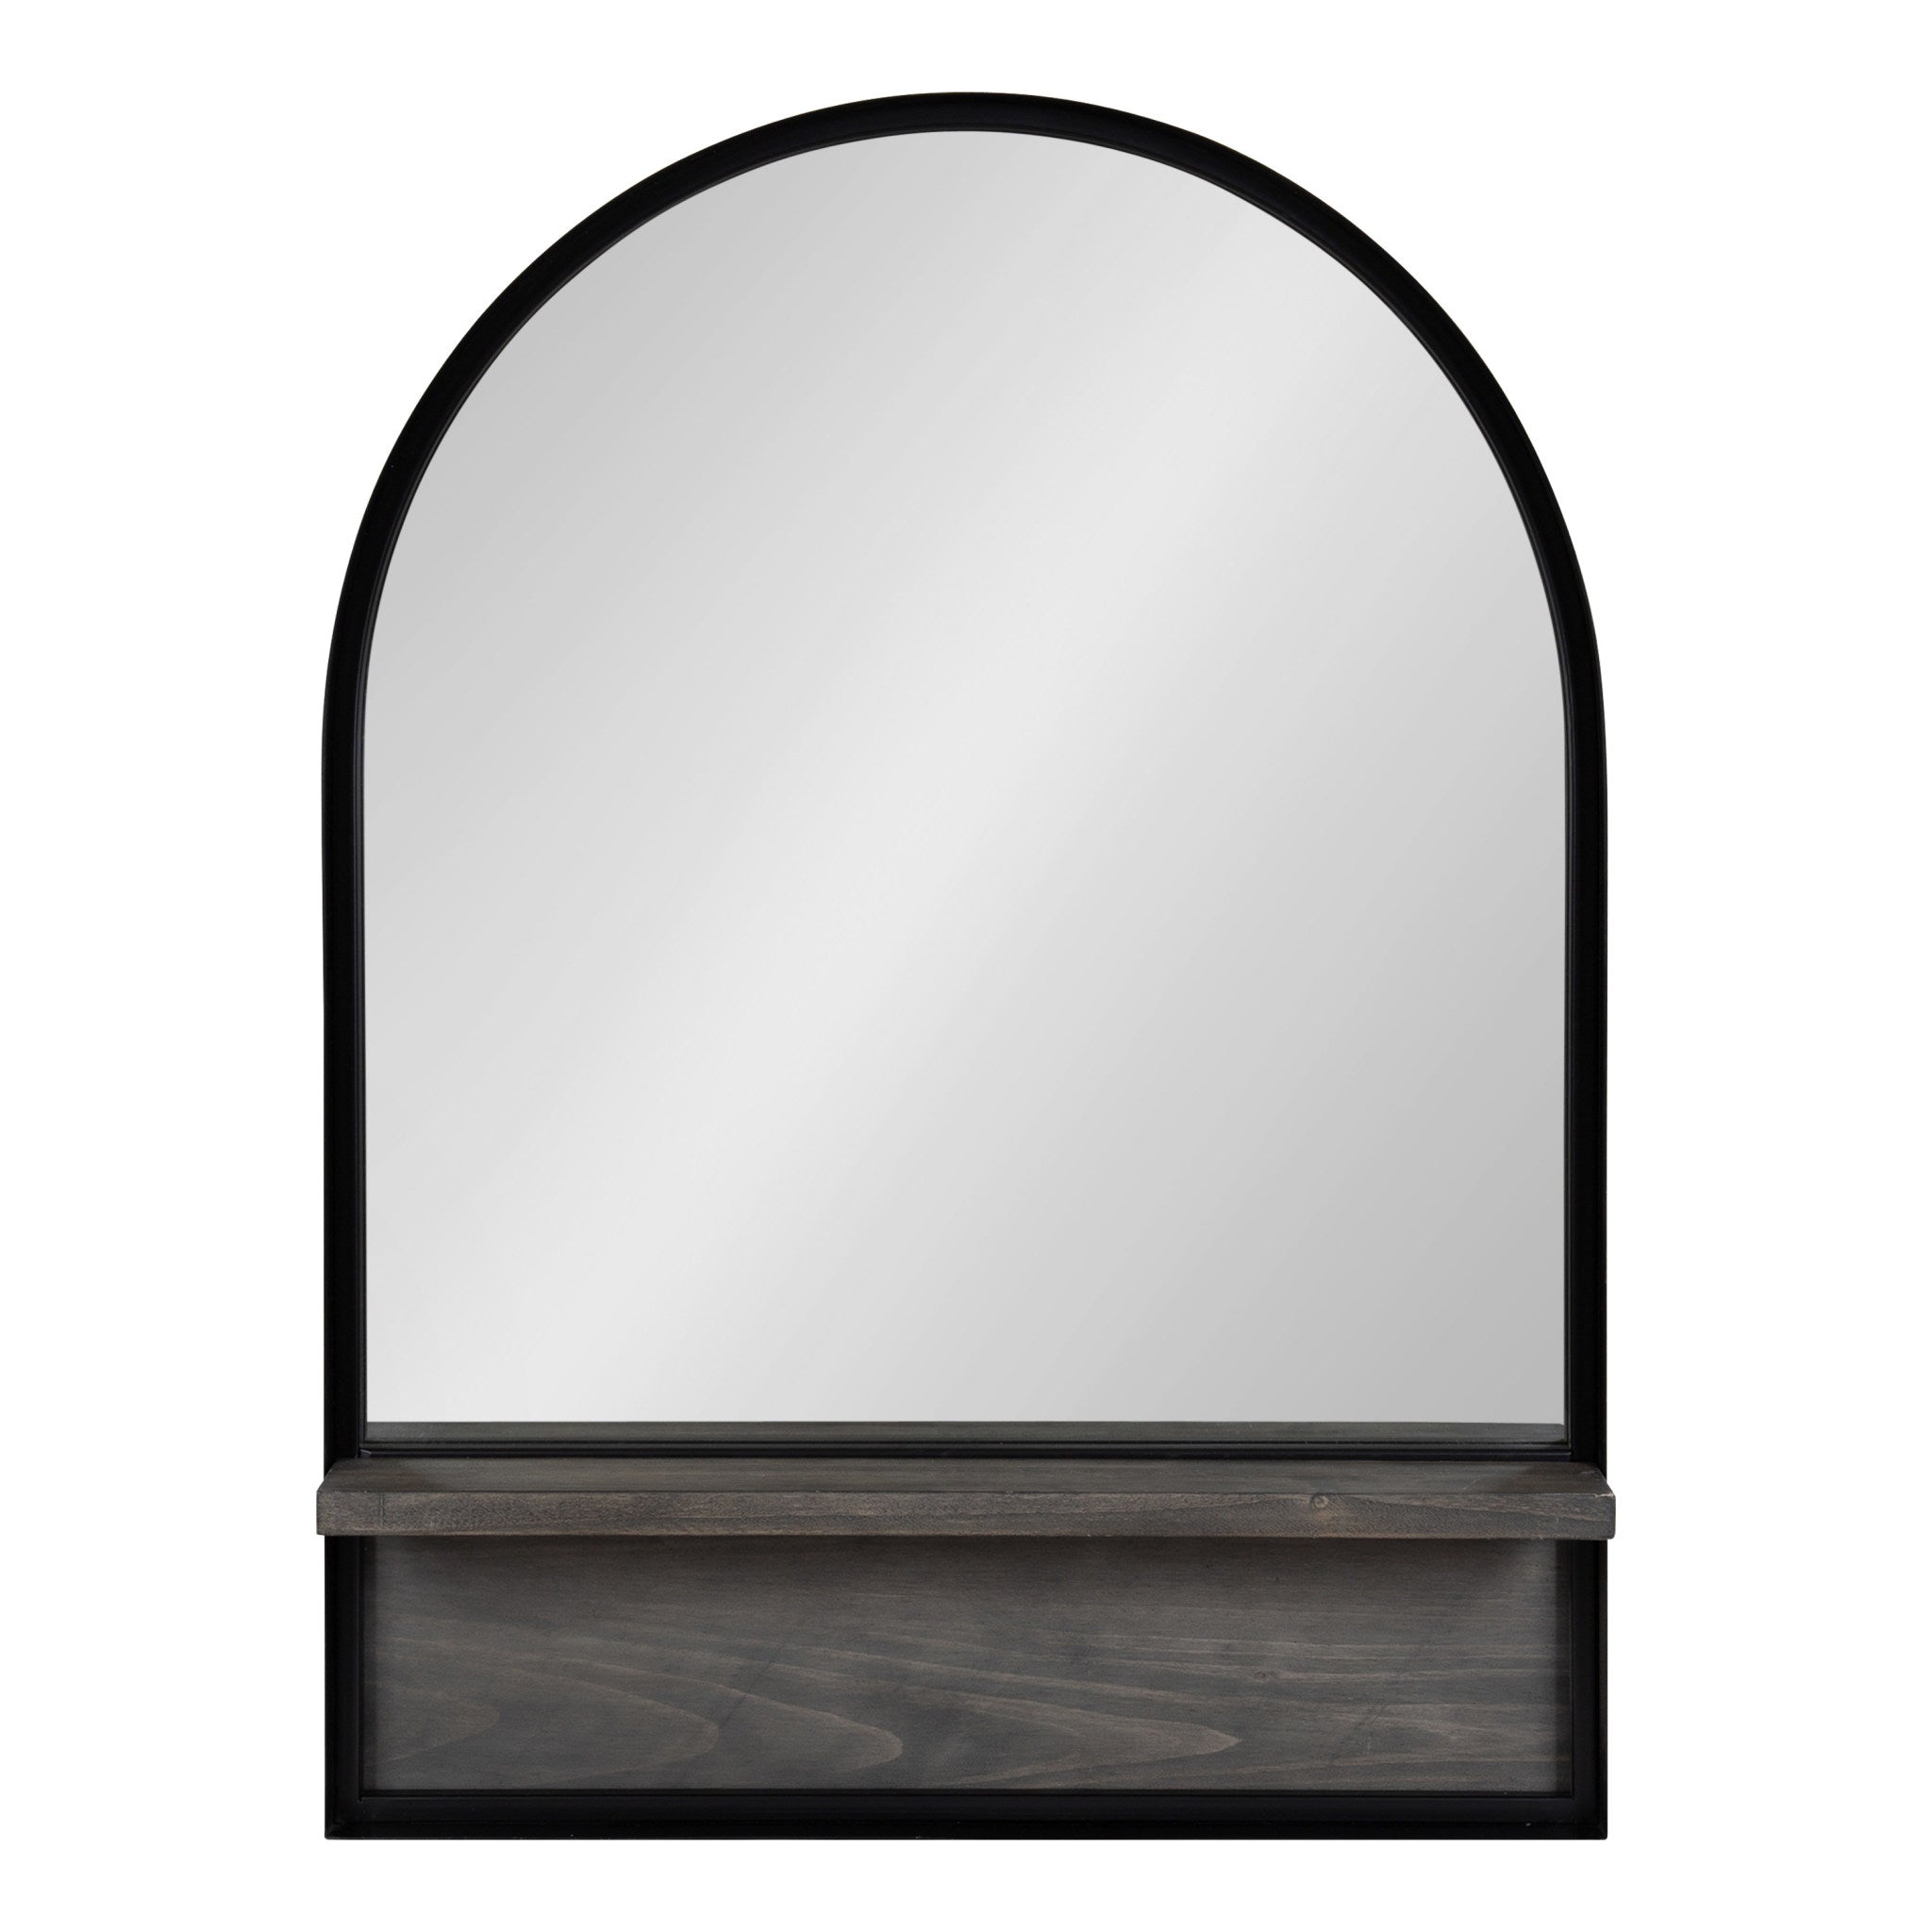 Owing Framed Arch Mirror with Shelf